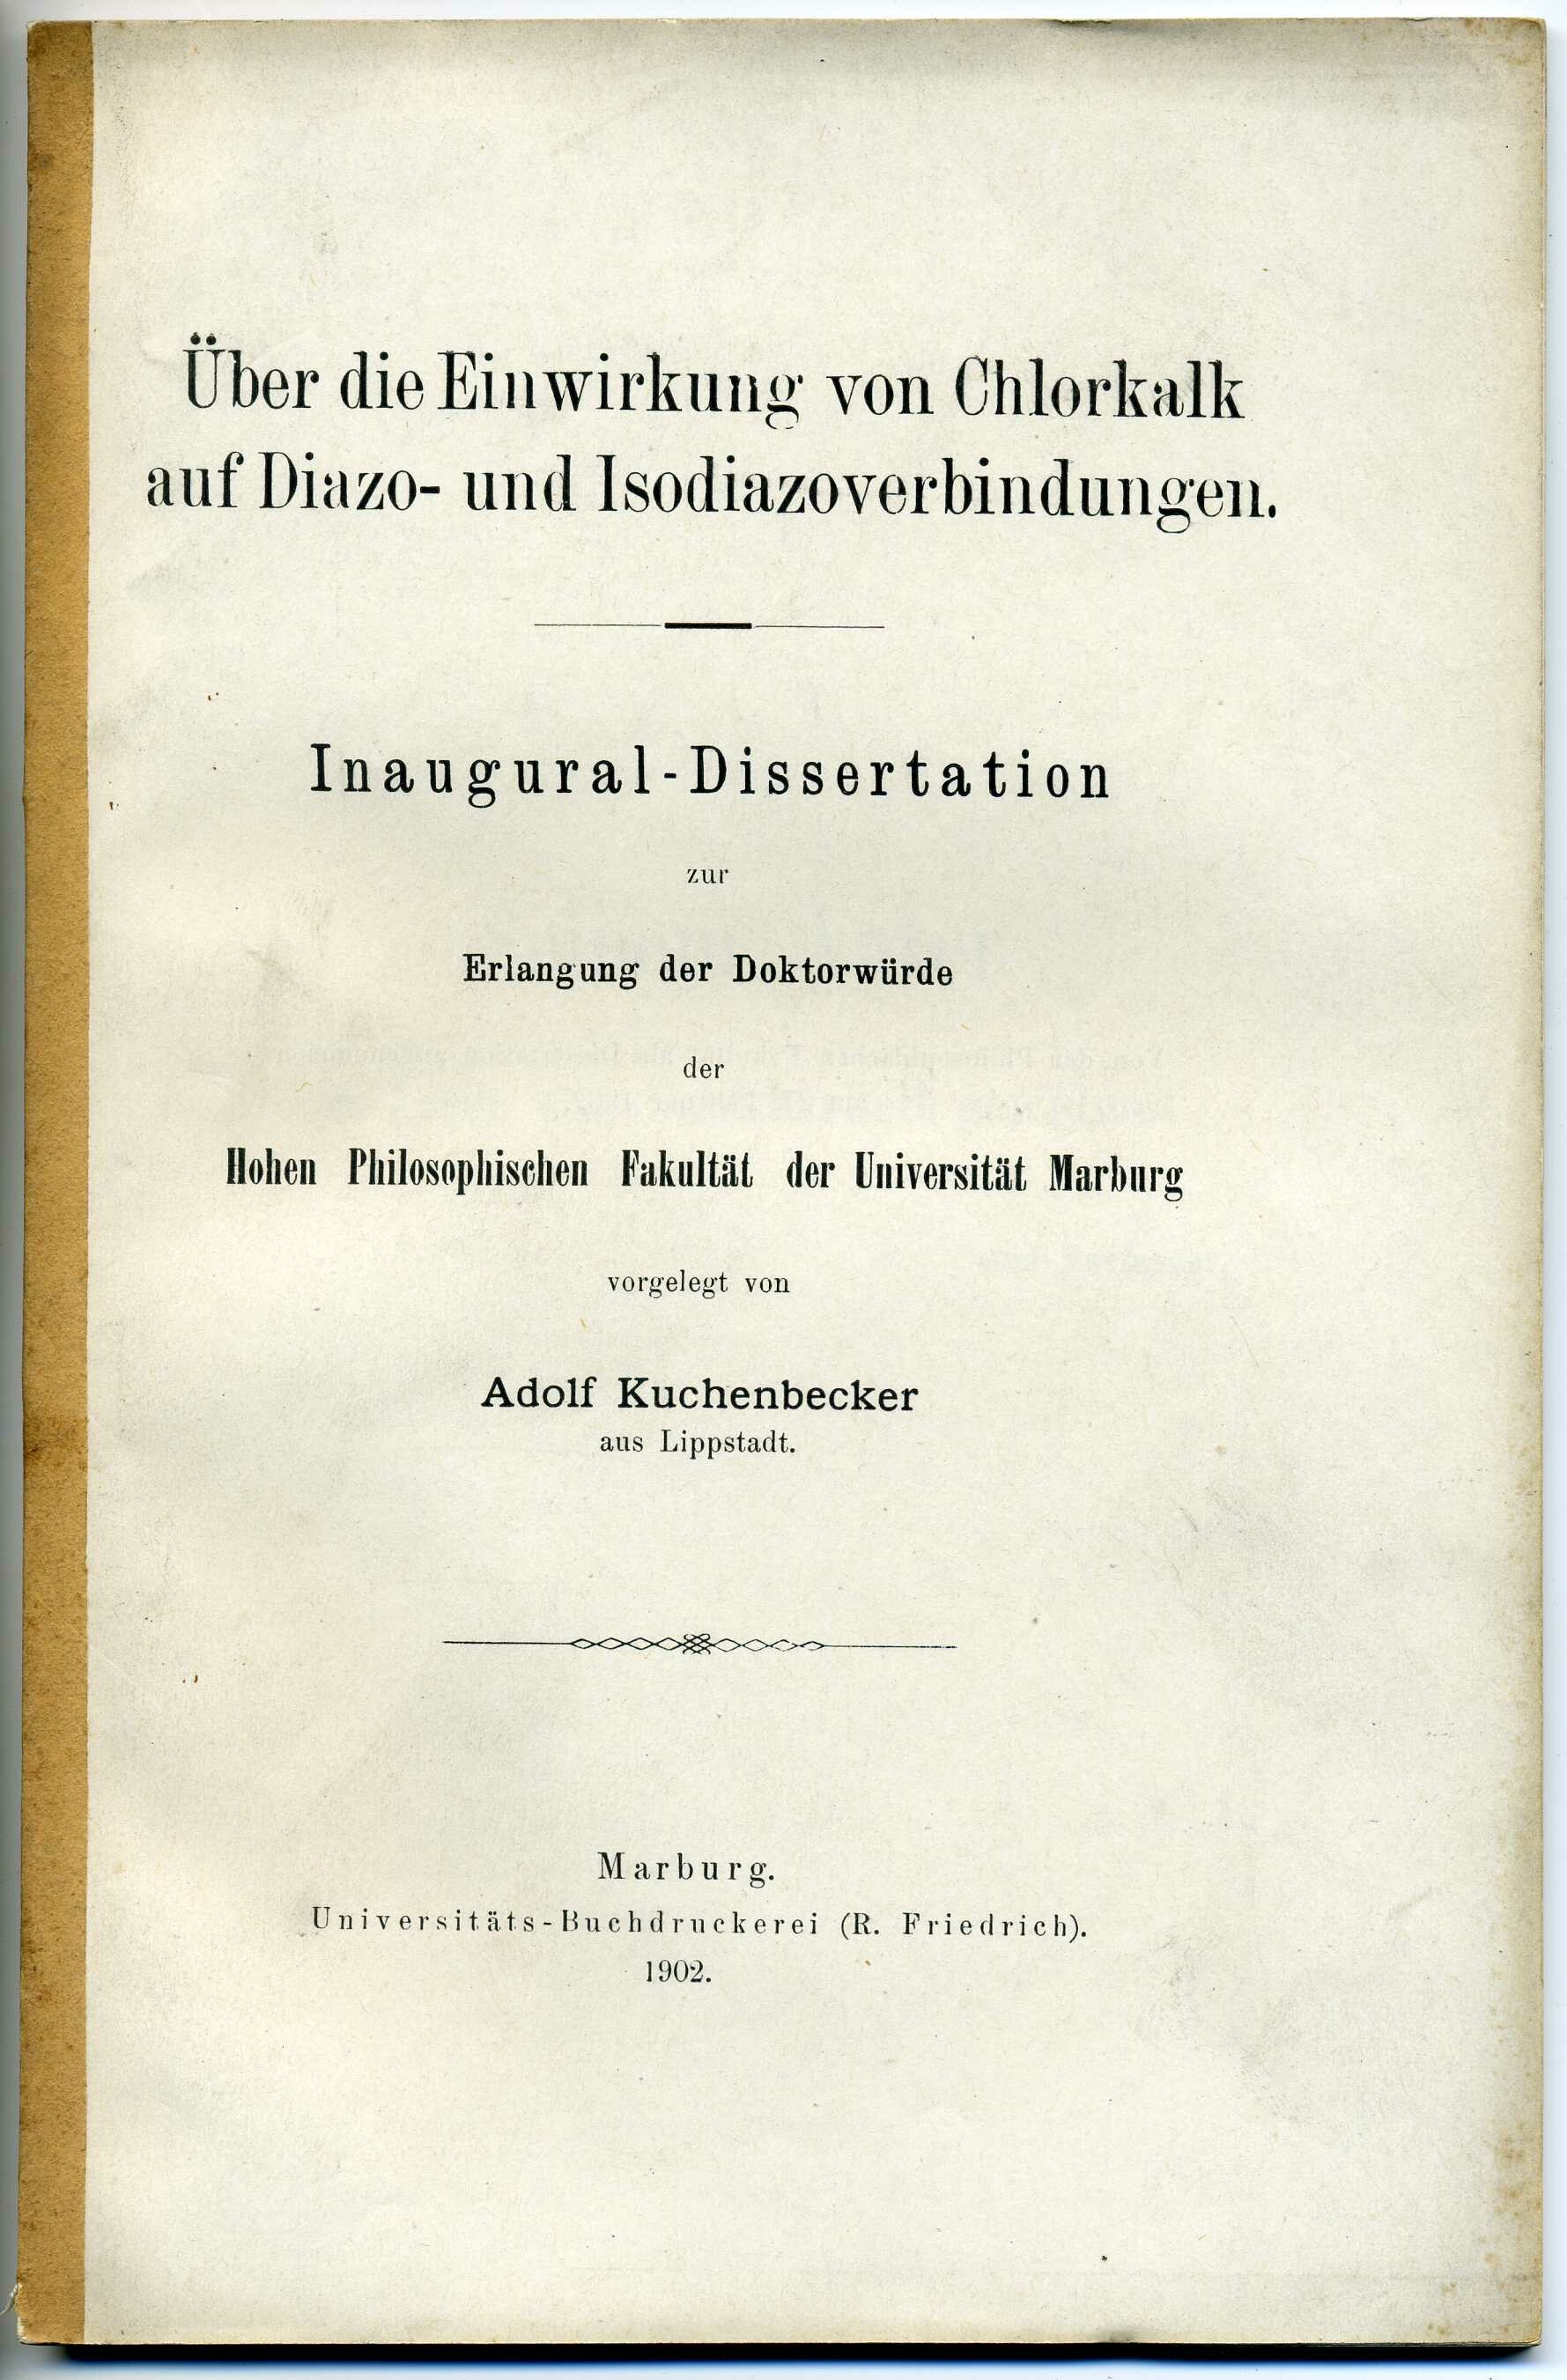 Dissertation Adolf Kuchenbecker (Stadtmuseum Lippstadt RR-F)